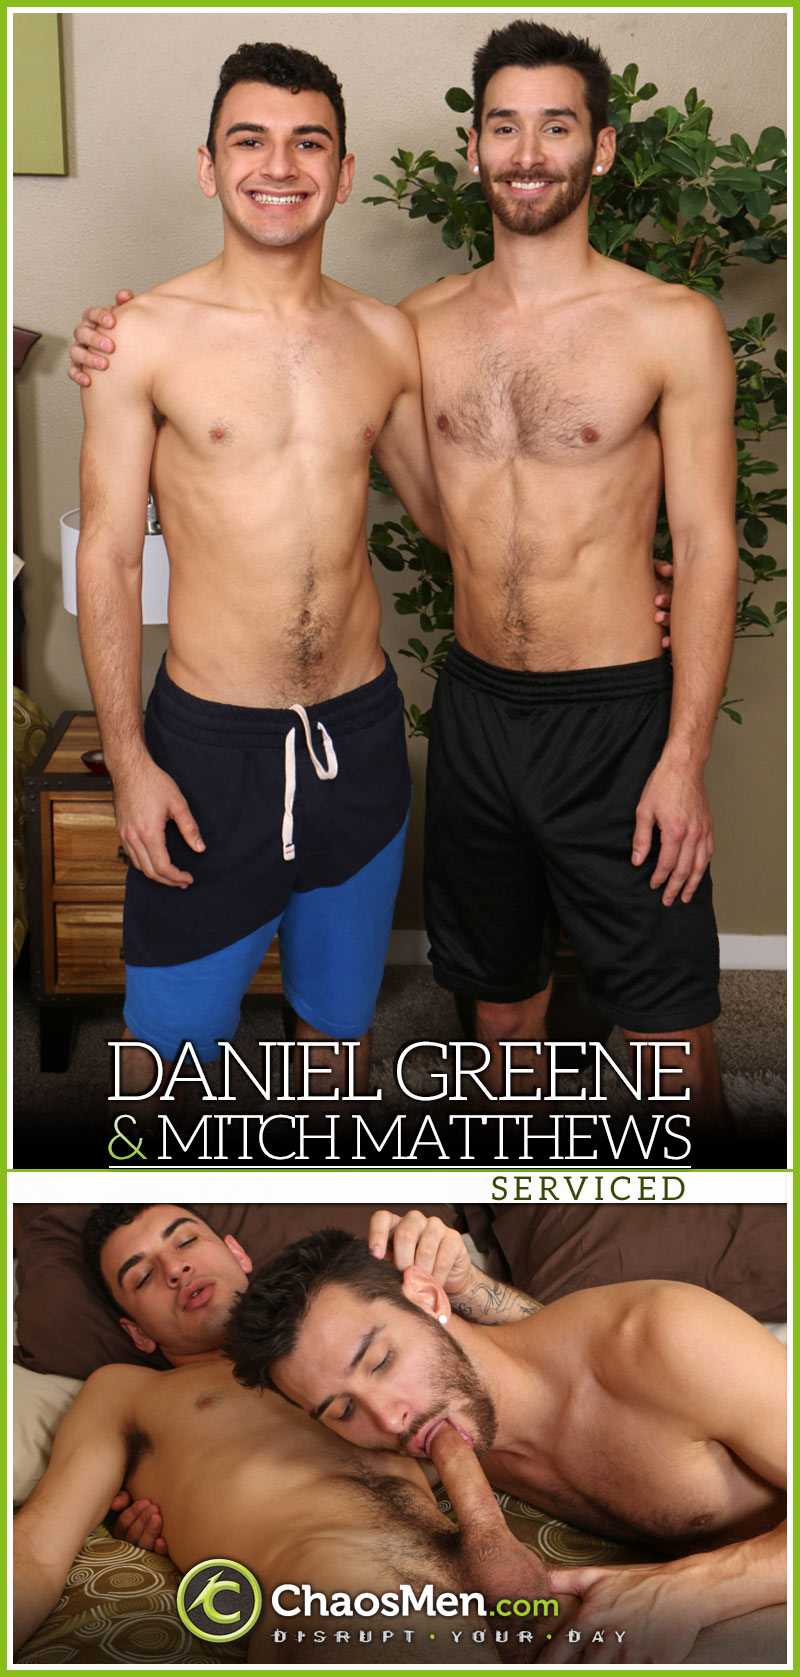 Daniel Greene & Mitch Matthews 'Serviced' at ChaosMen